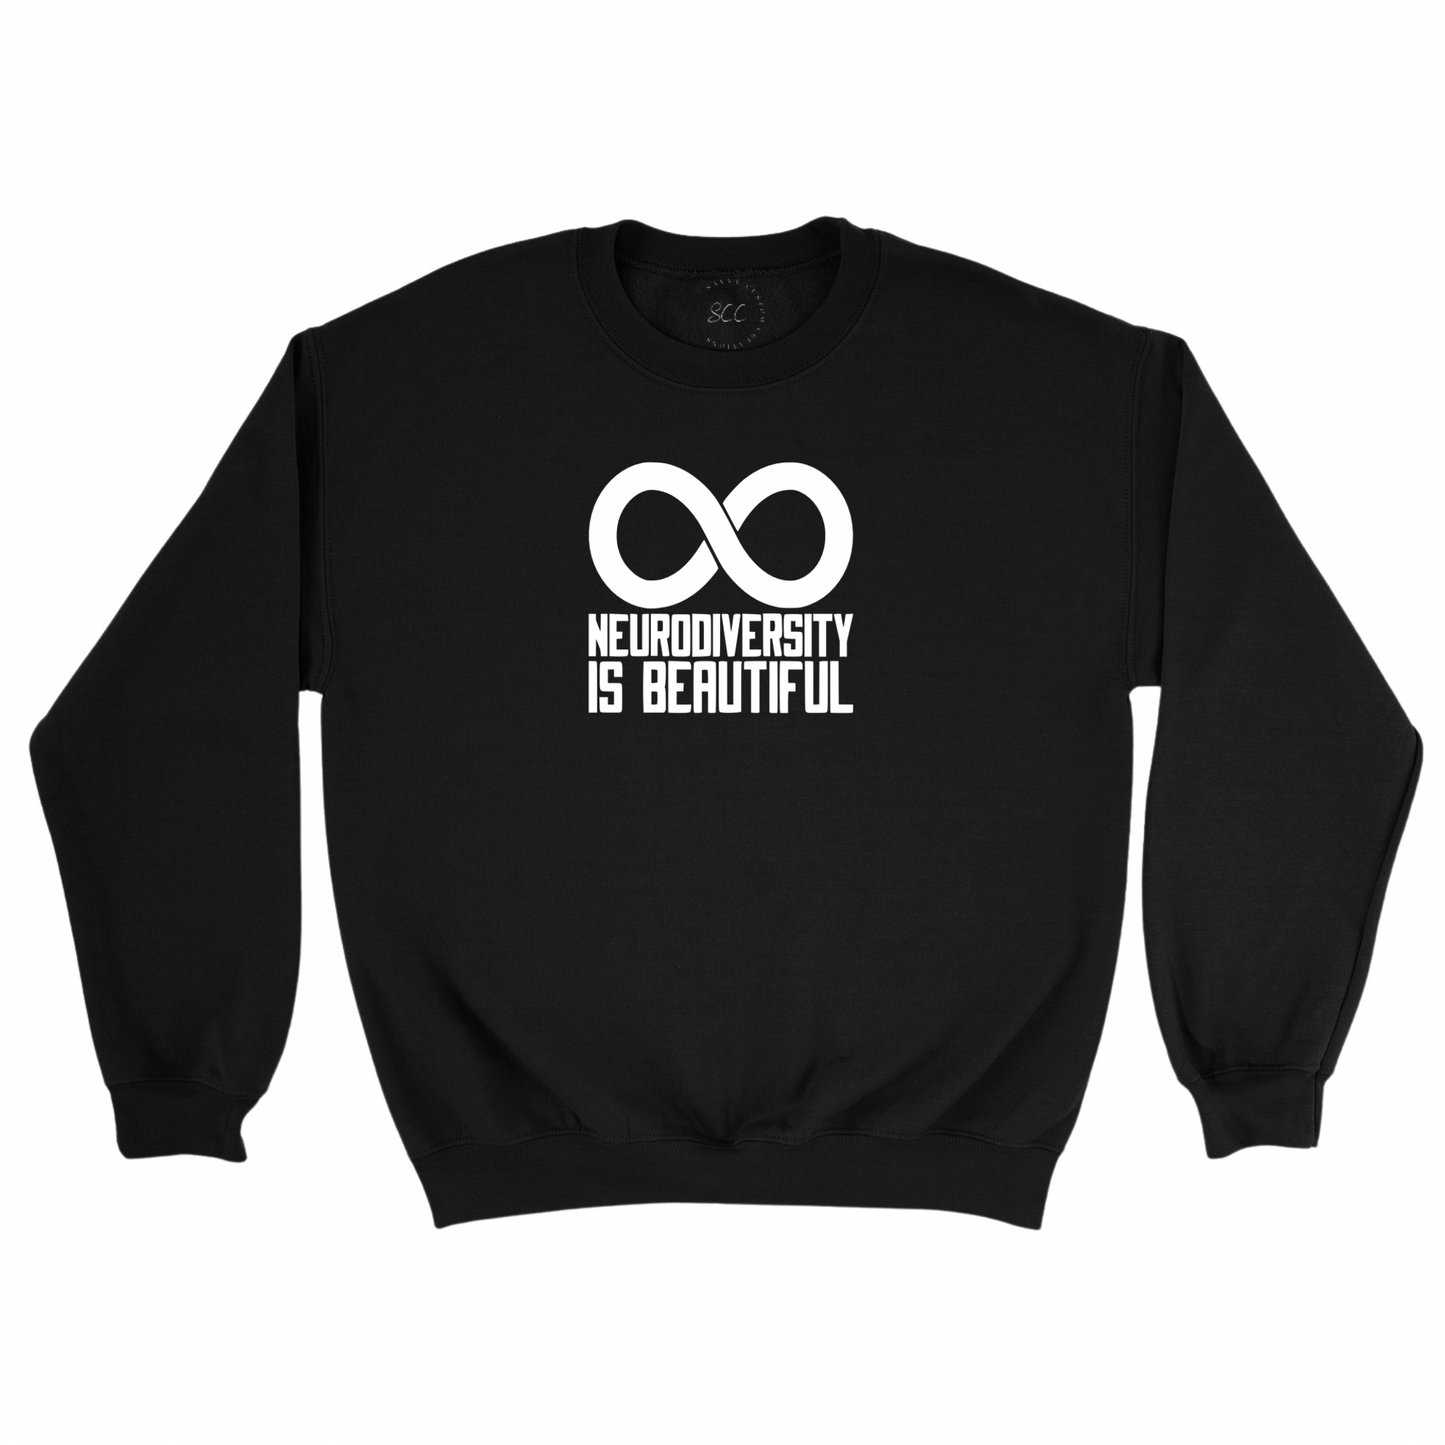 NEURODIVERSITY IS BEAUTIFUL - Unisex Sweatshirt